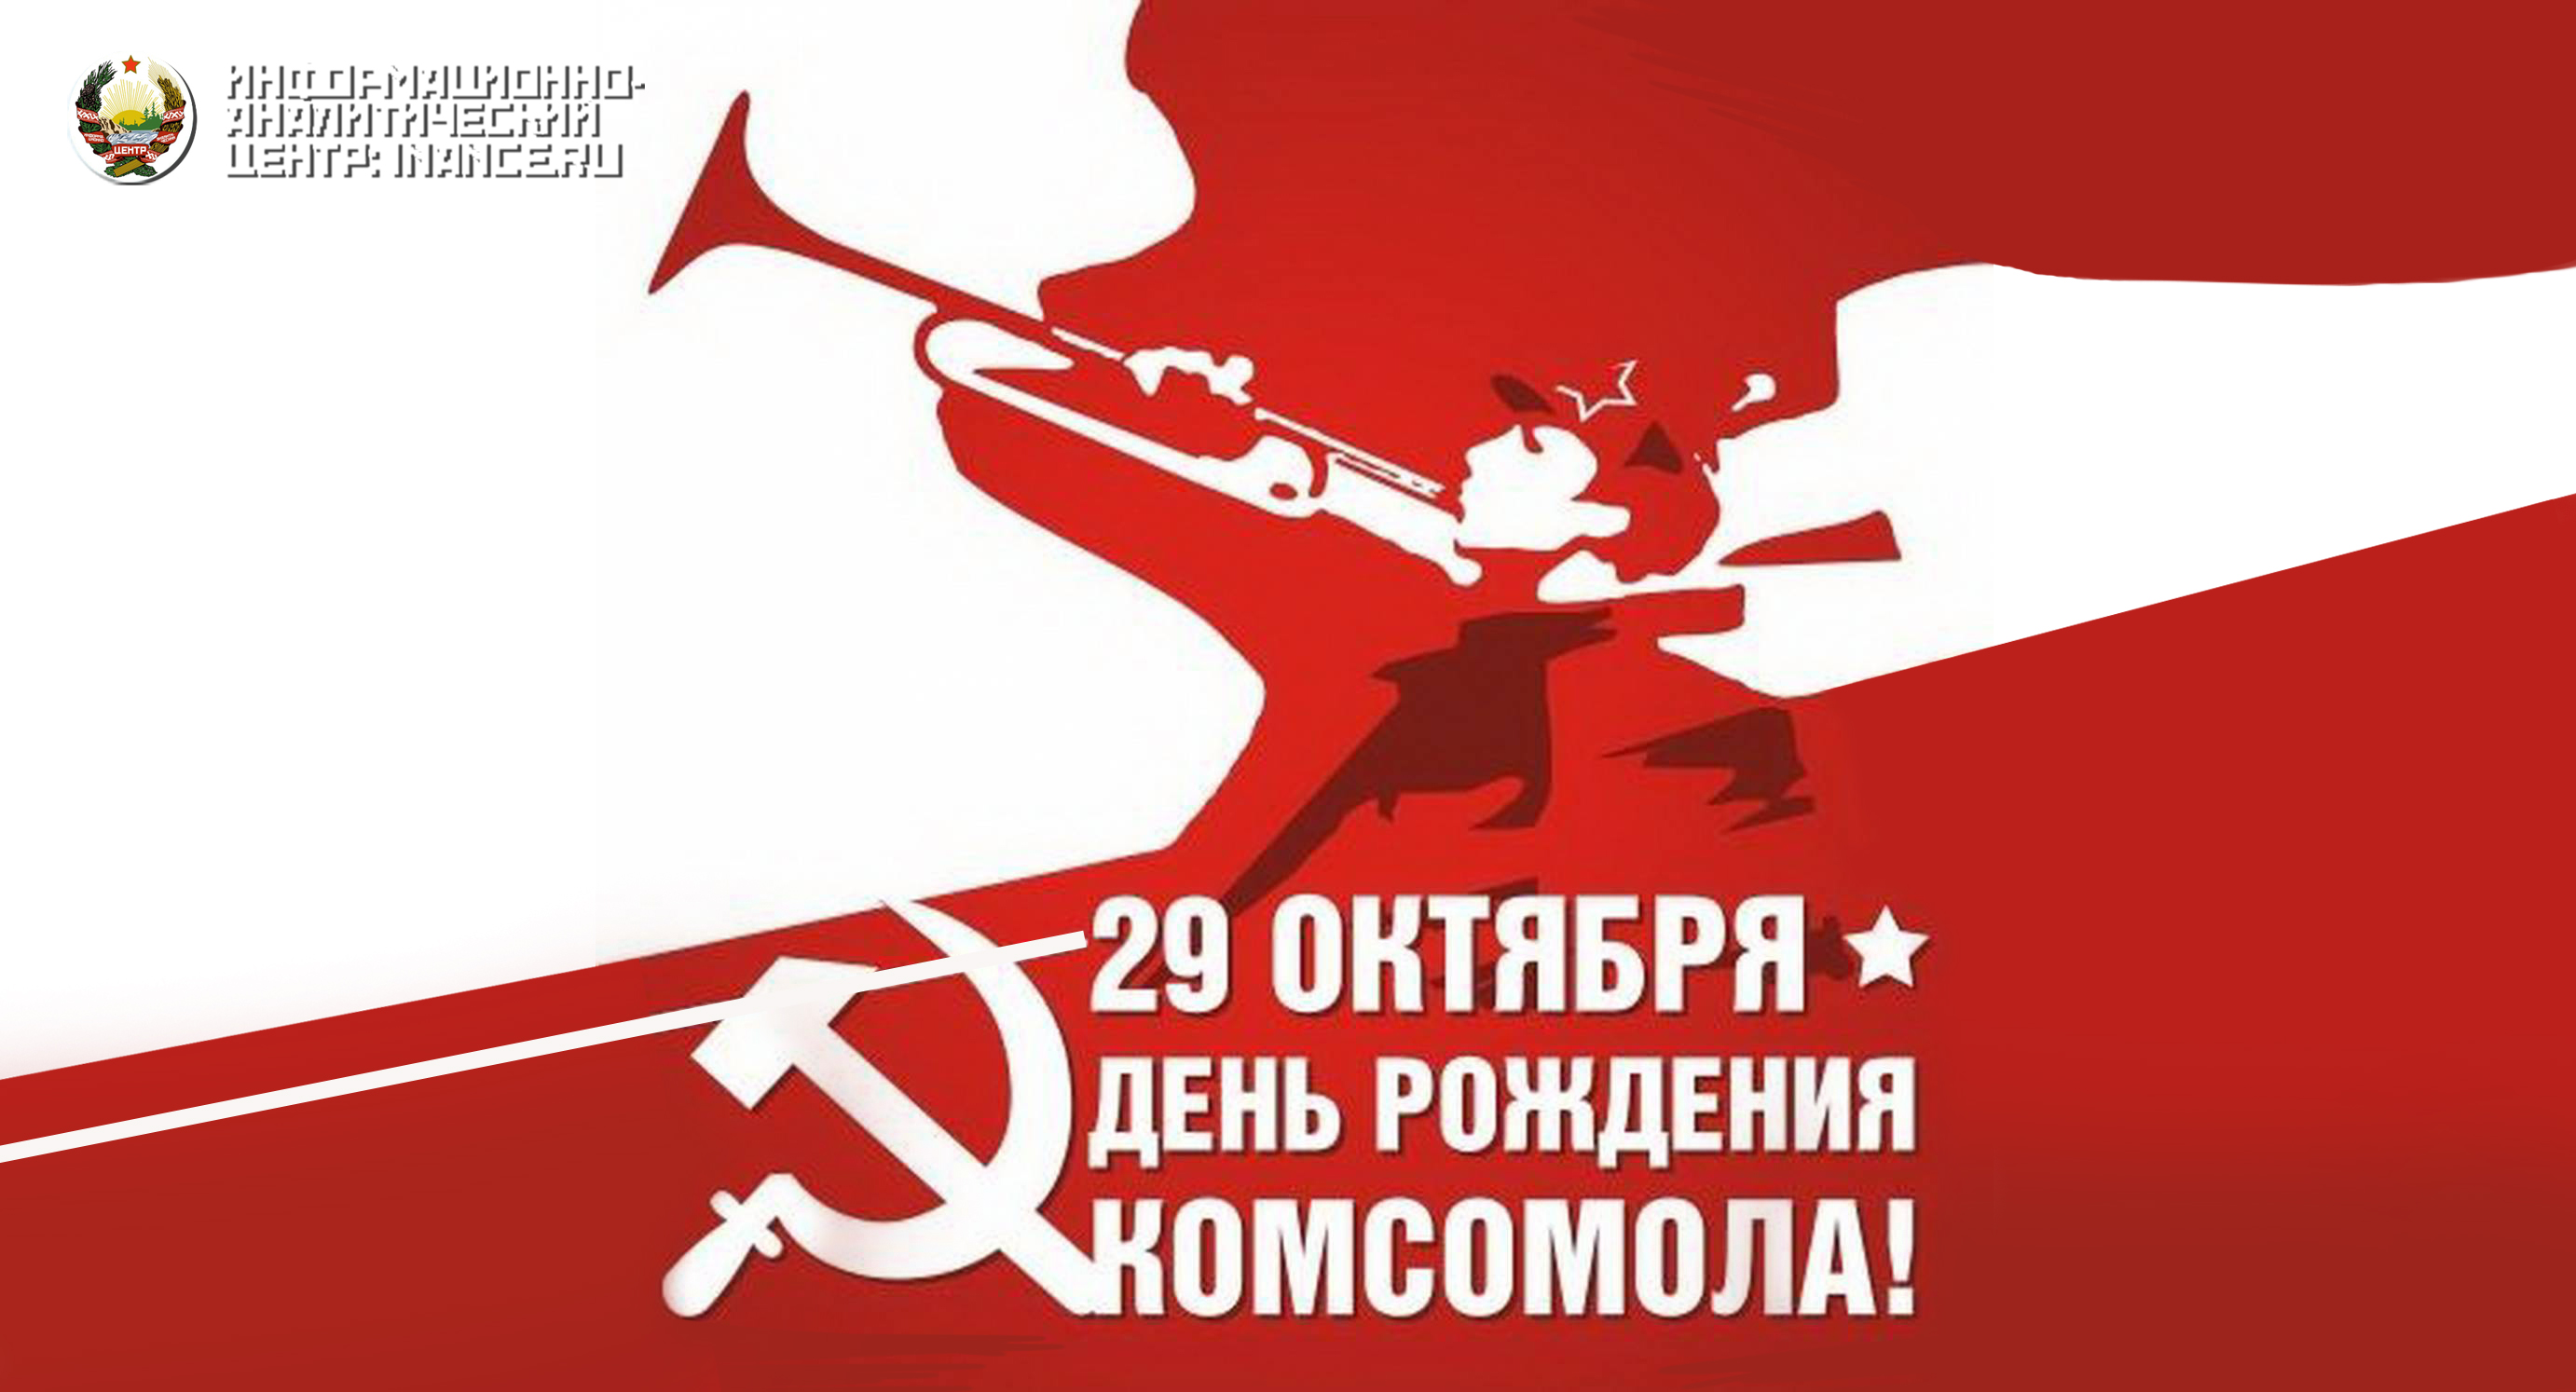 https://inance.ru/wp-content/uploads/2014/10/public-komsomol.jpg